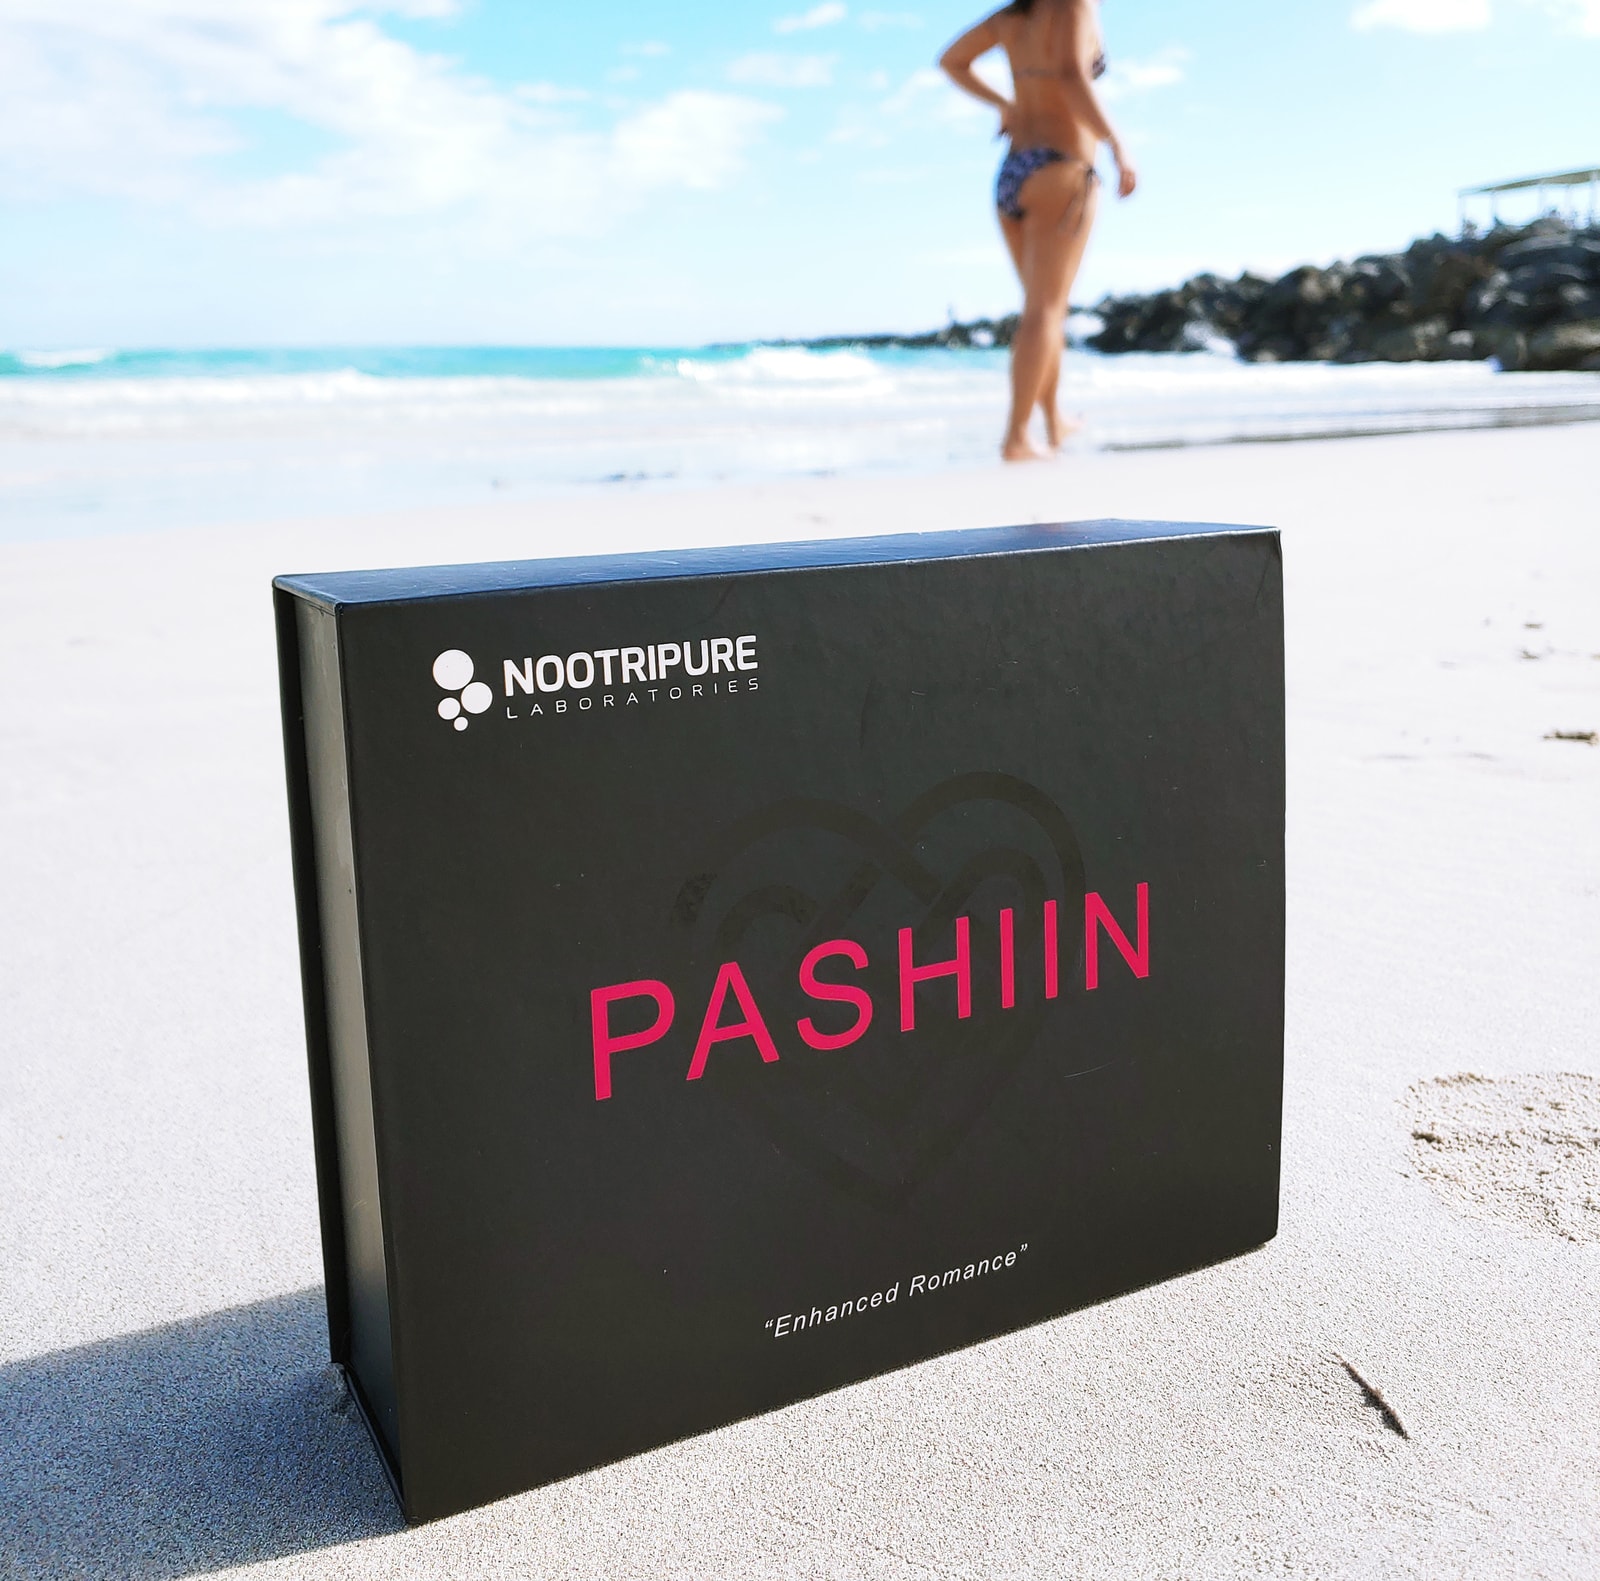 alt="Pashiin helps enhance libido and improve sexual desire and health."